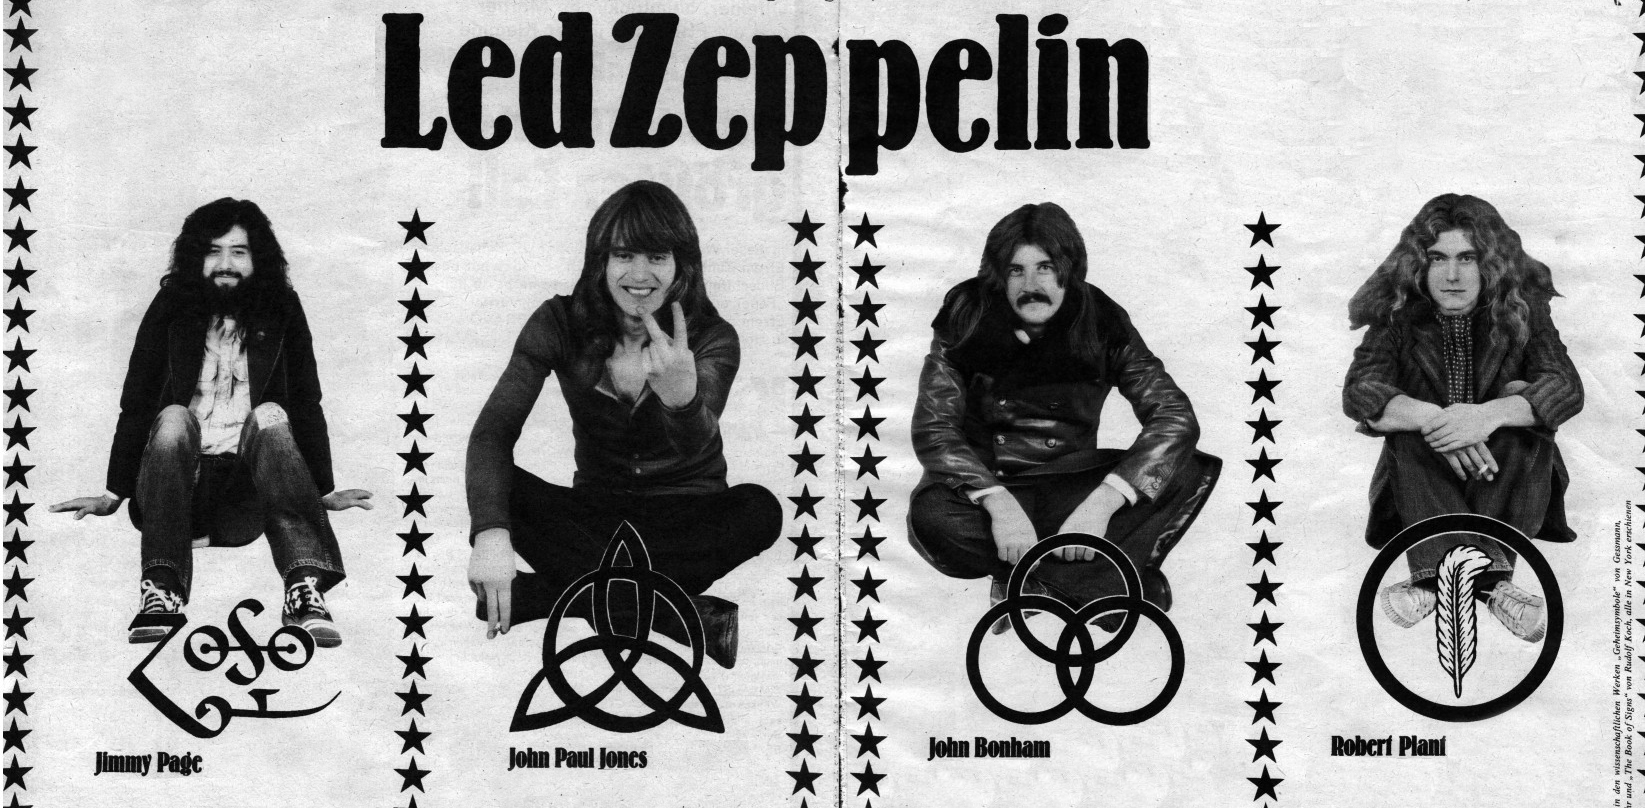 Led Zeppelin symbols